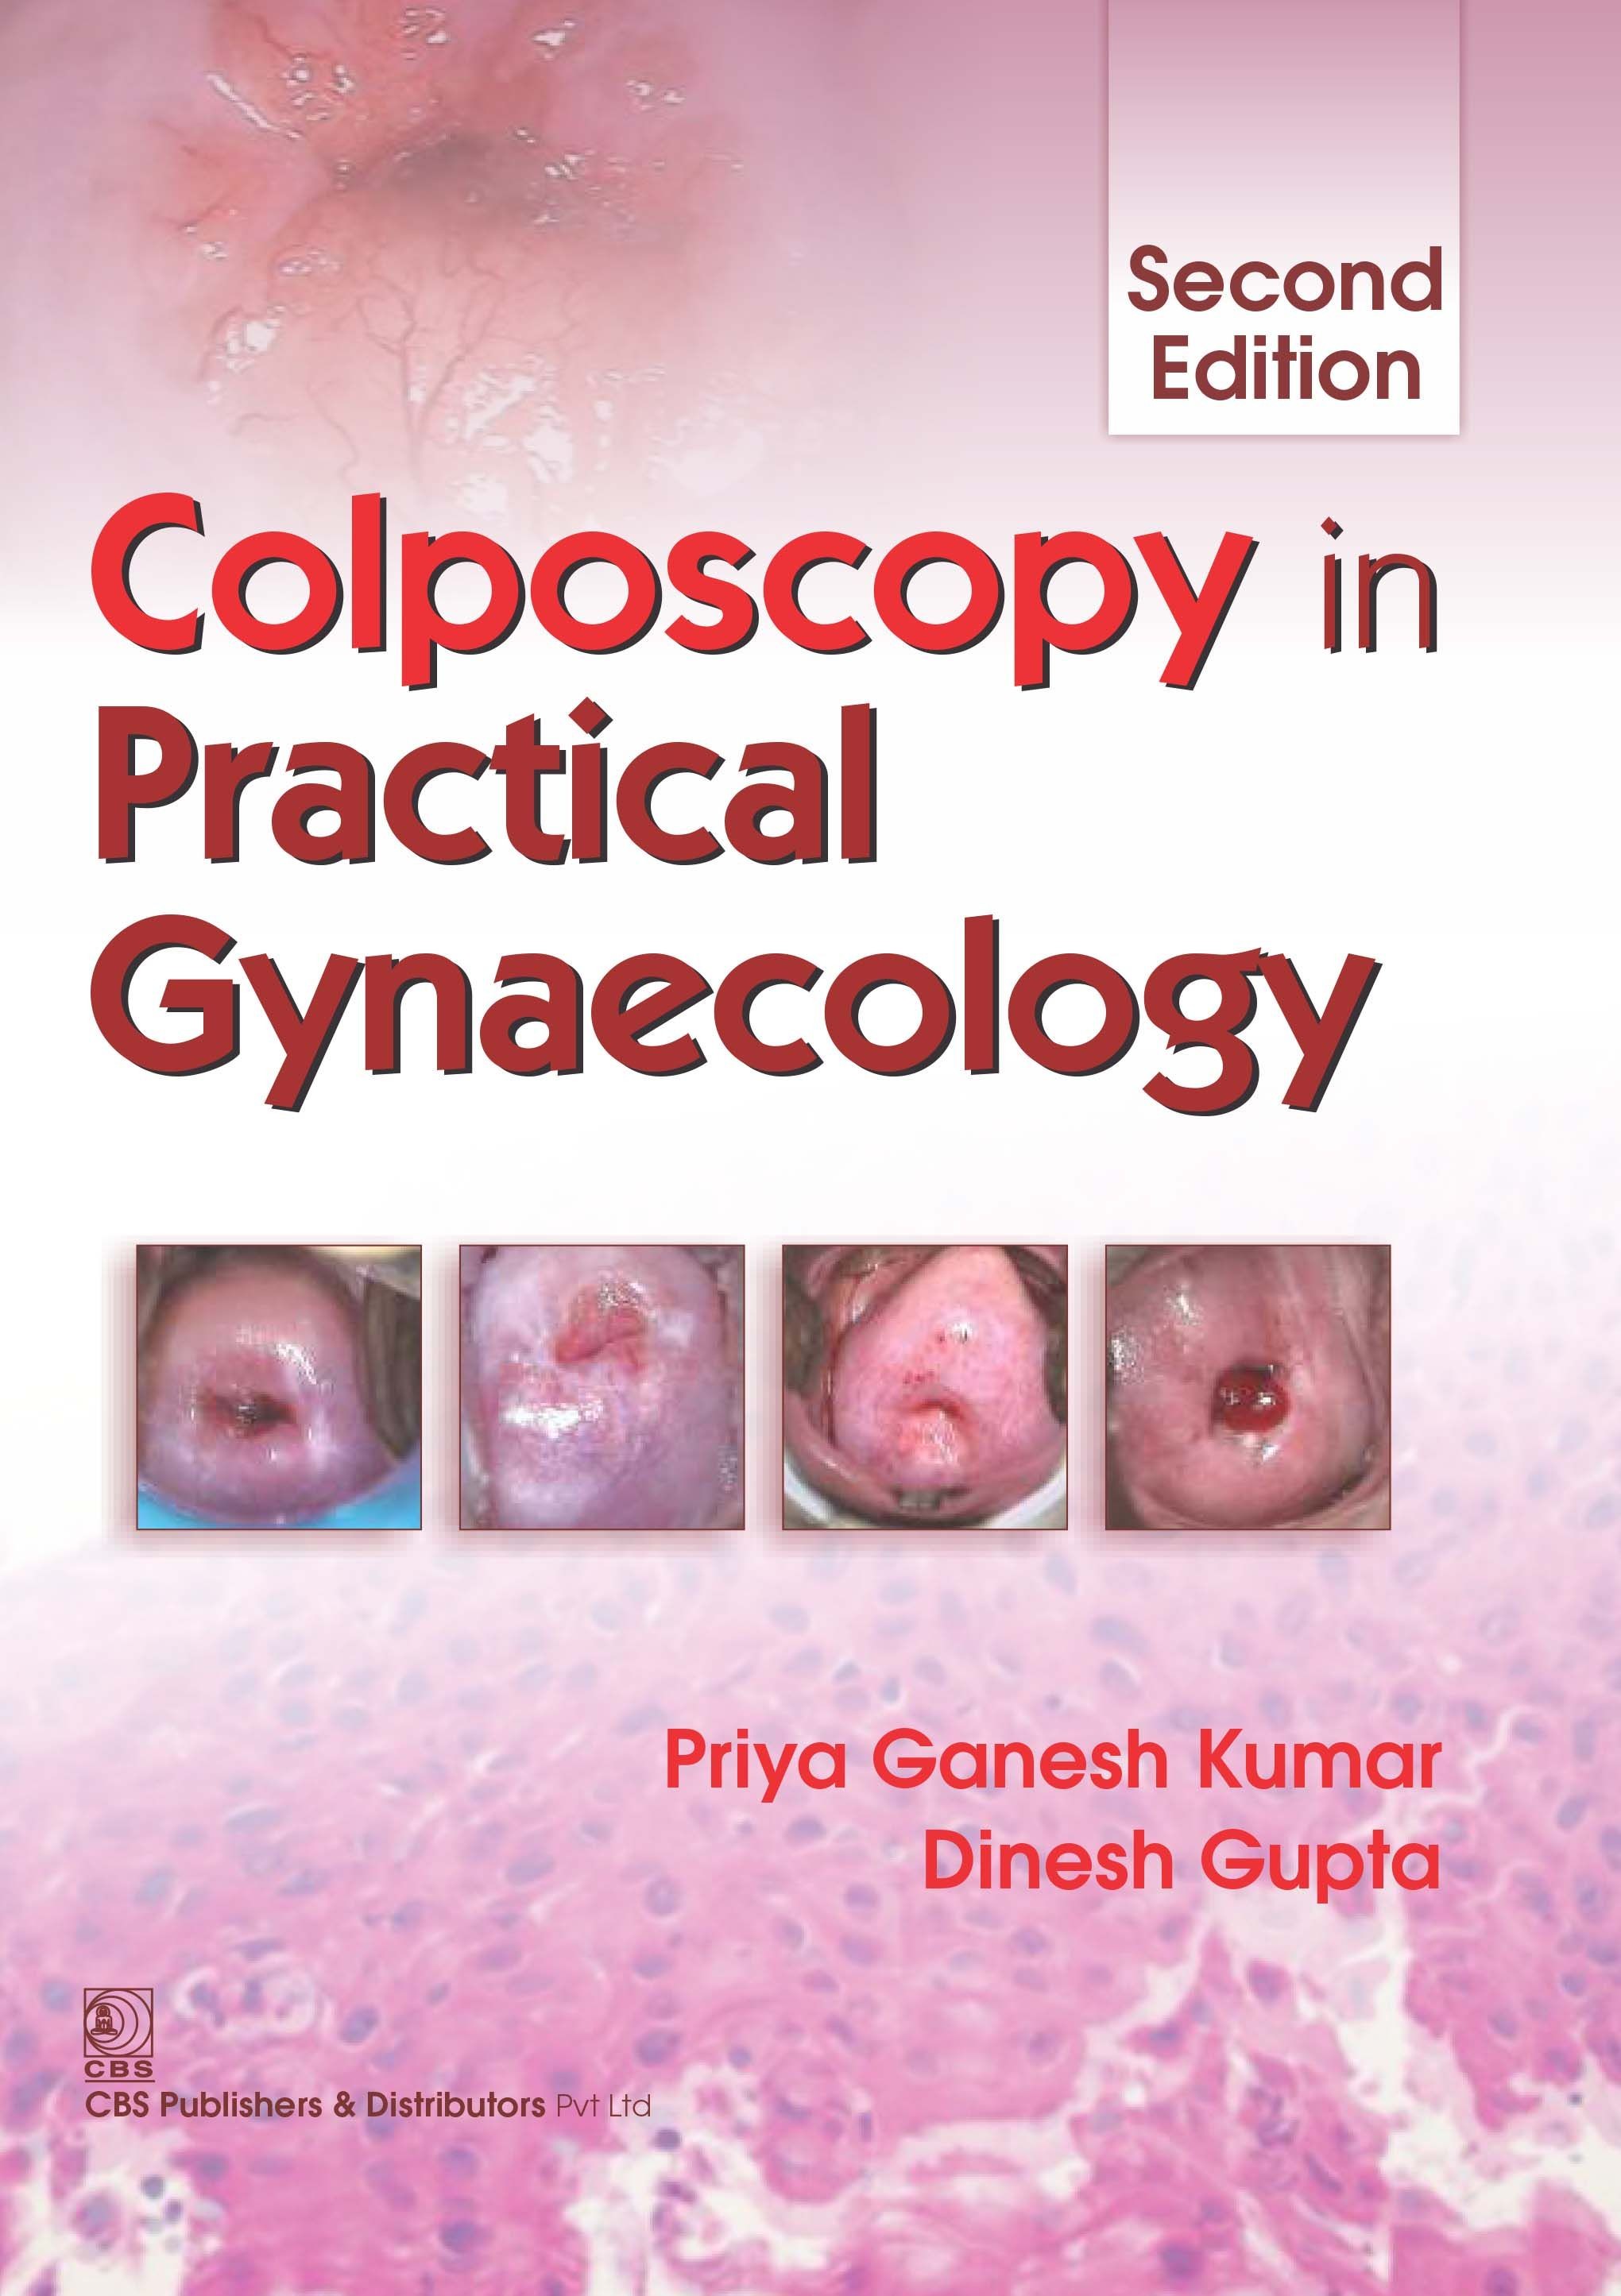 Colposcopy In Practical Gynecology 2Ed (Pb 2017)